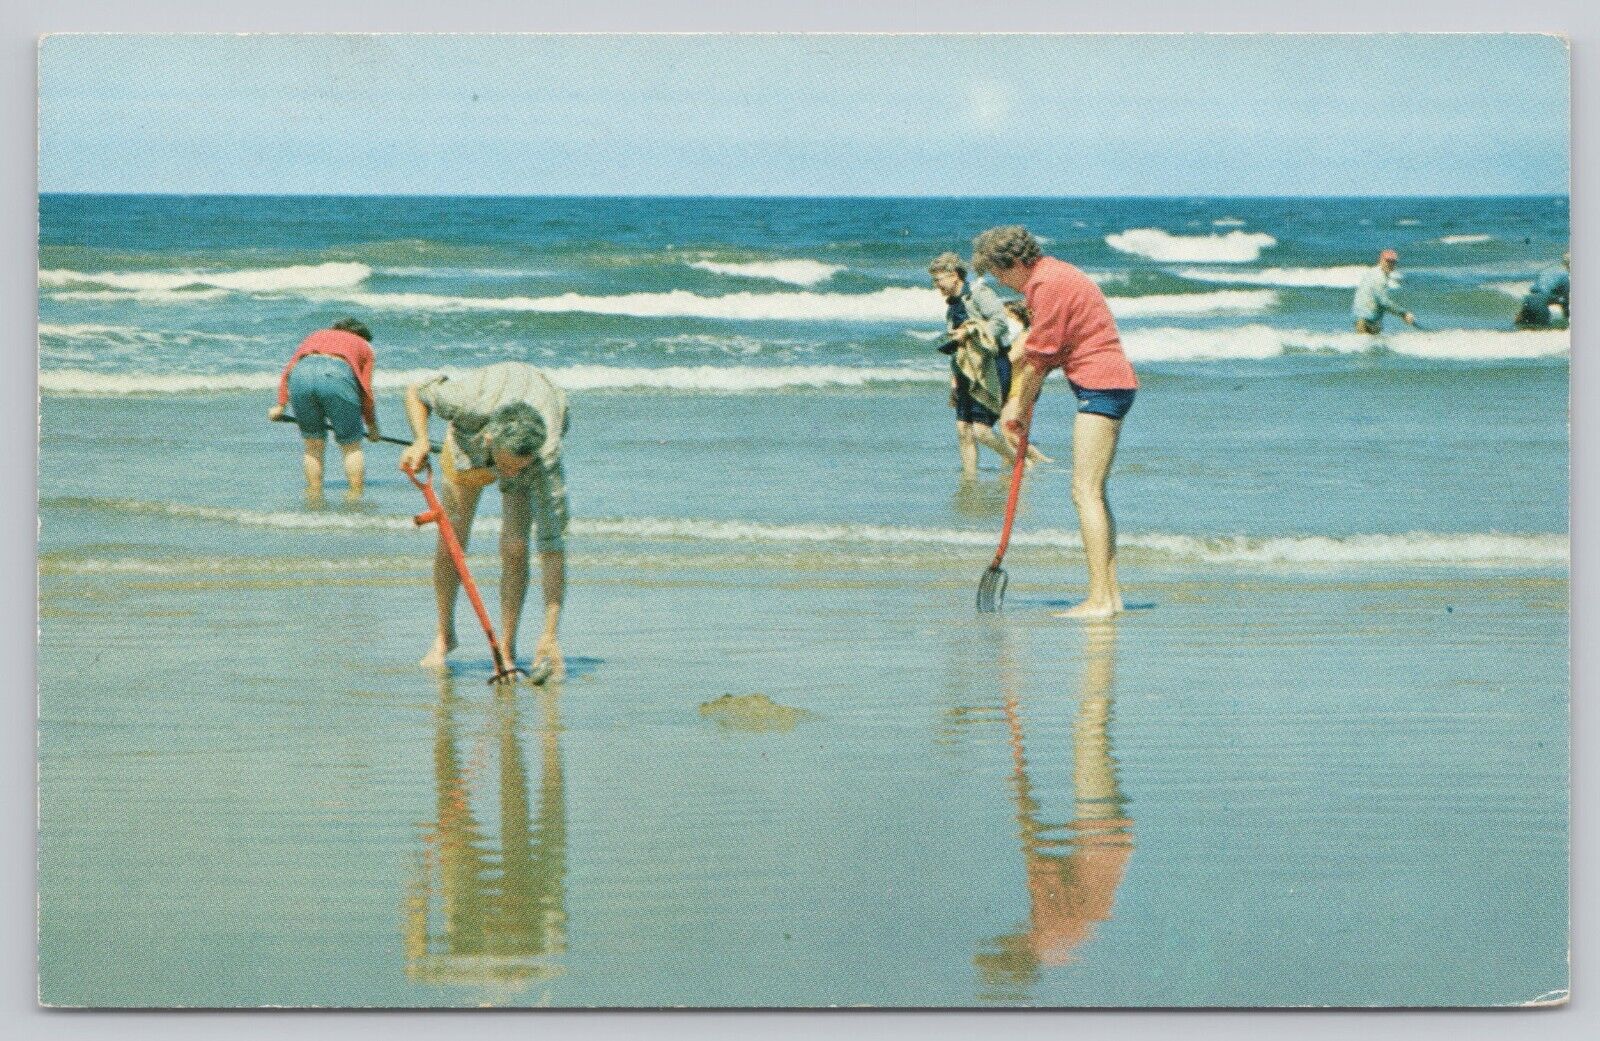 Pismo Beach California, Clam Diggers Clamming on the Beach, Vintage Postcard